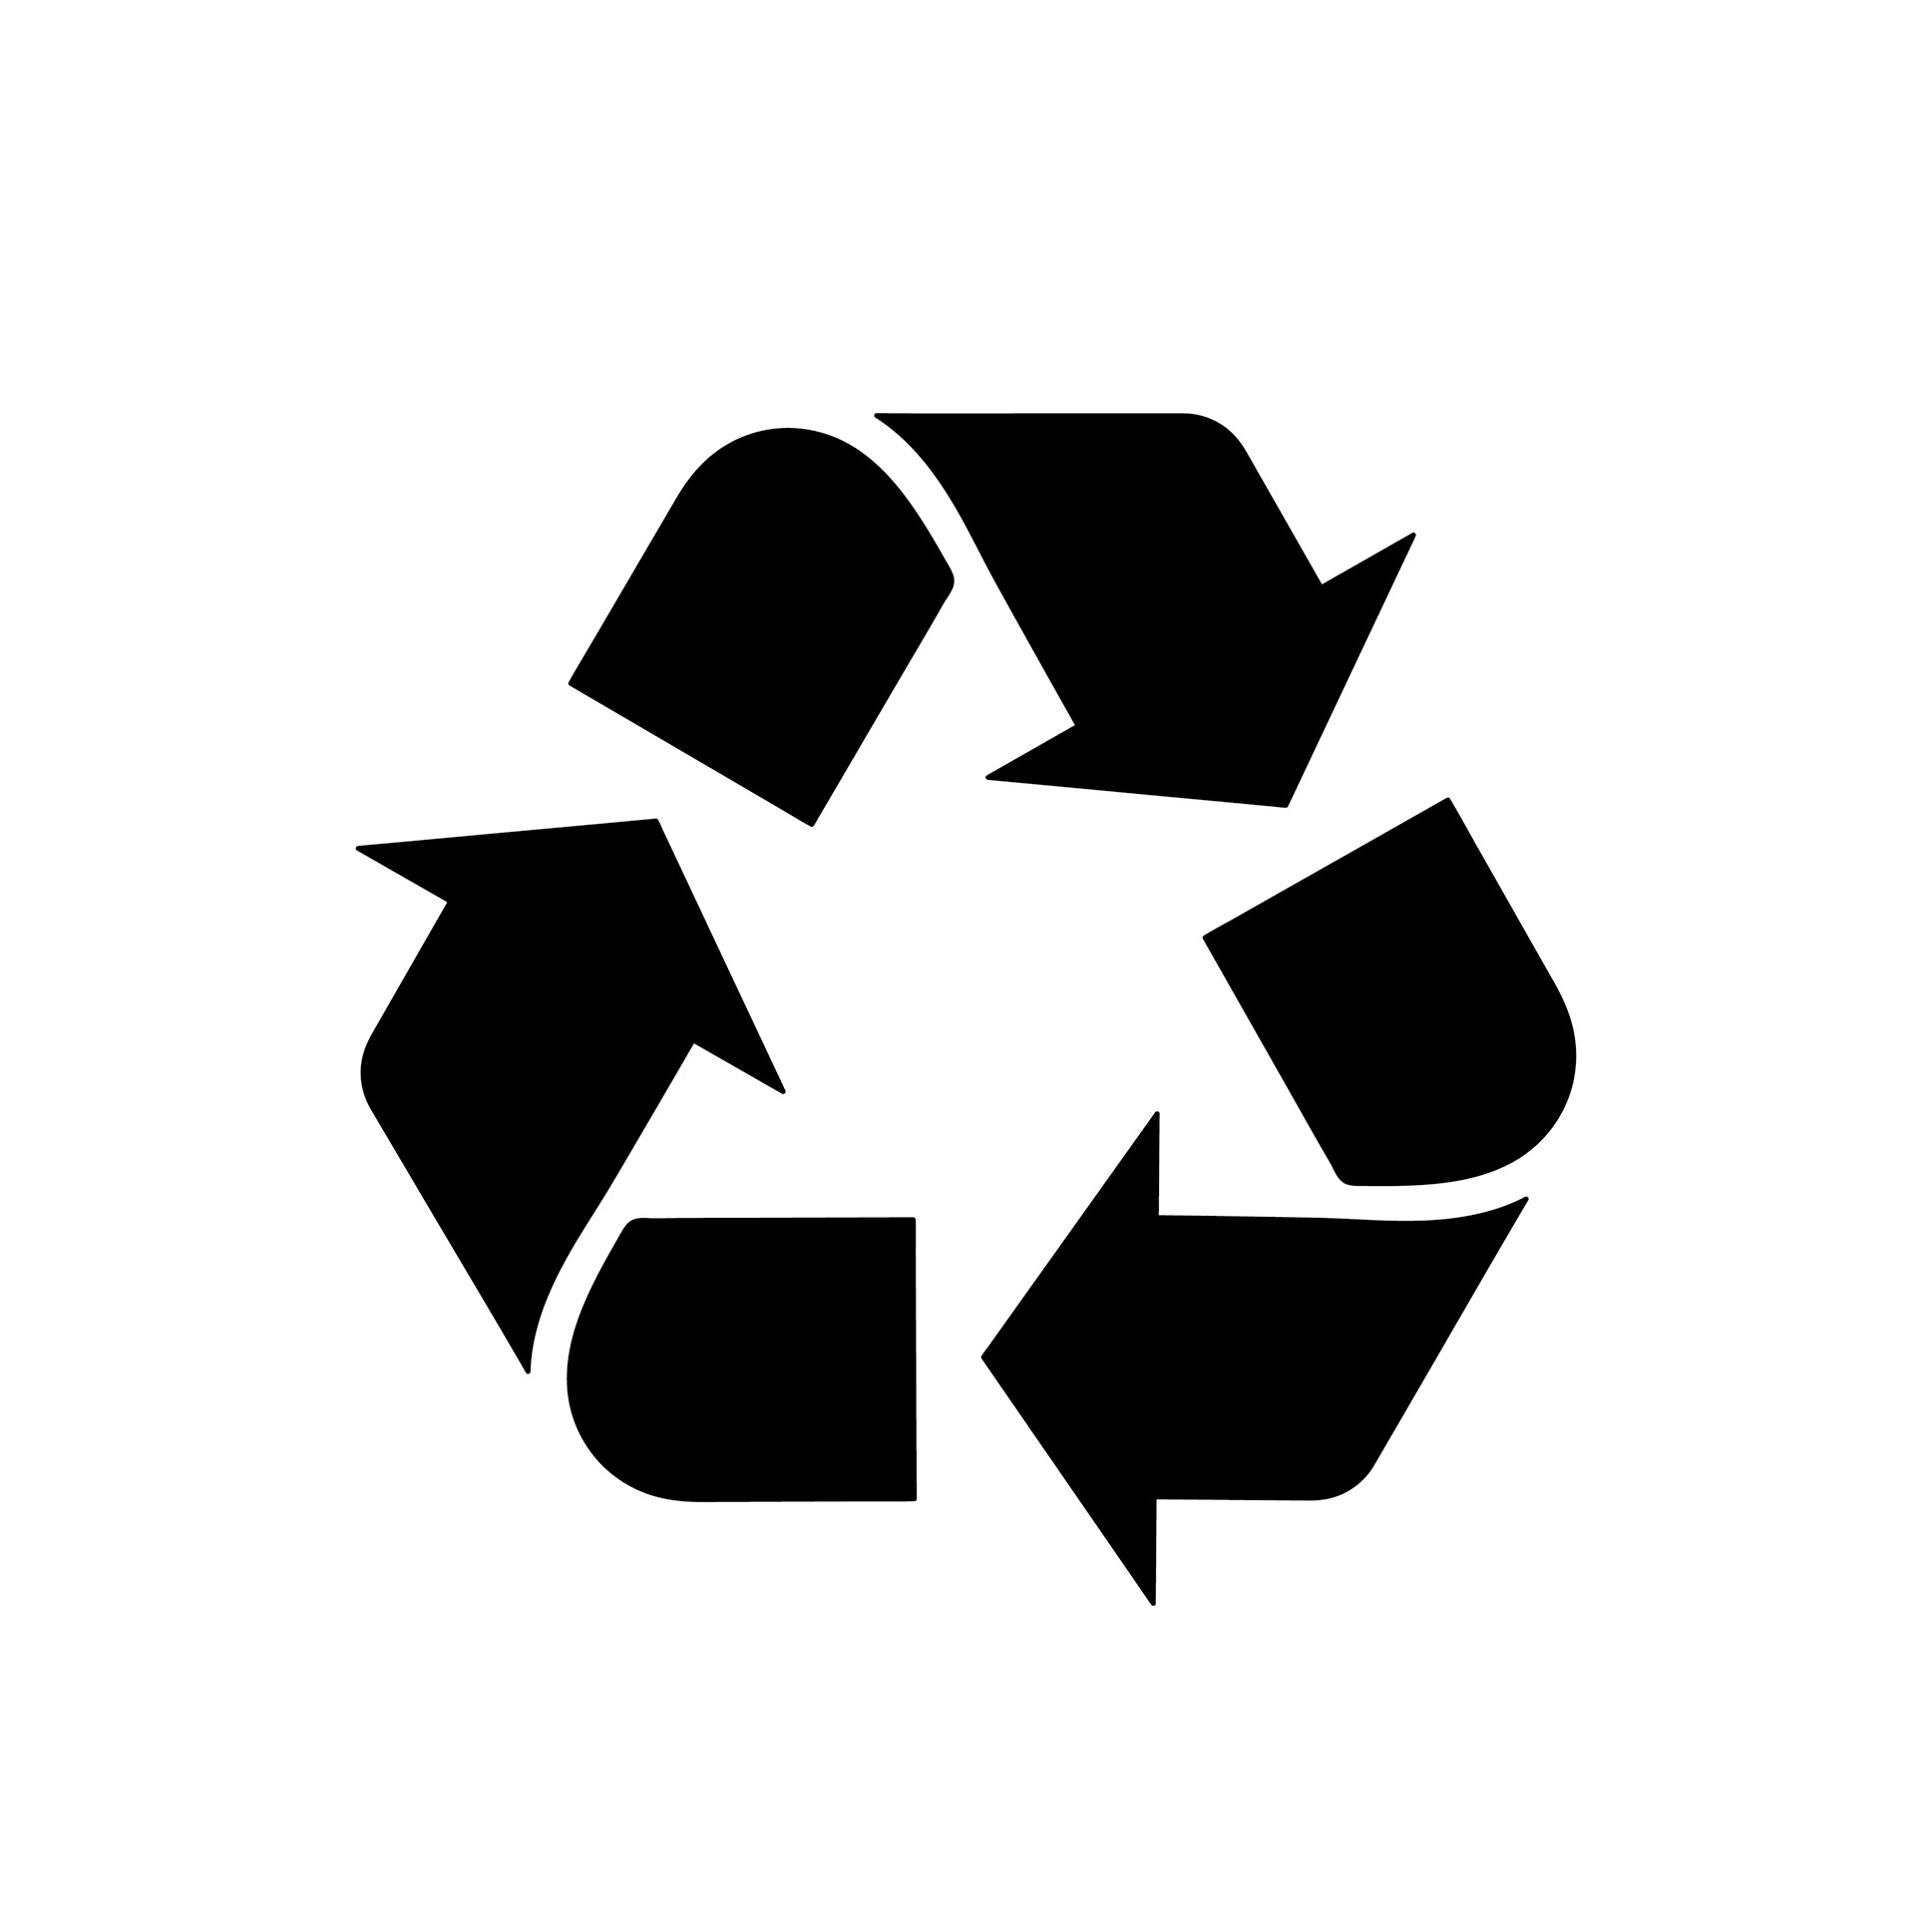 Universal Recycling Symbol